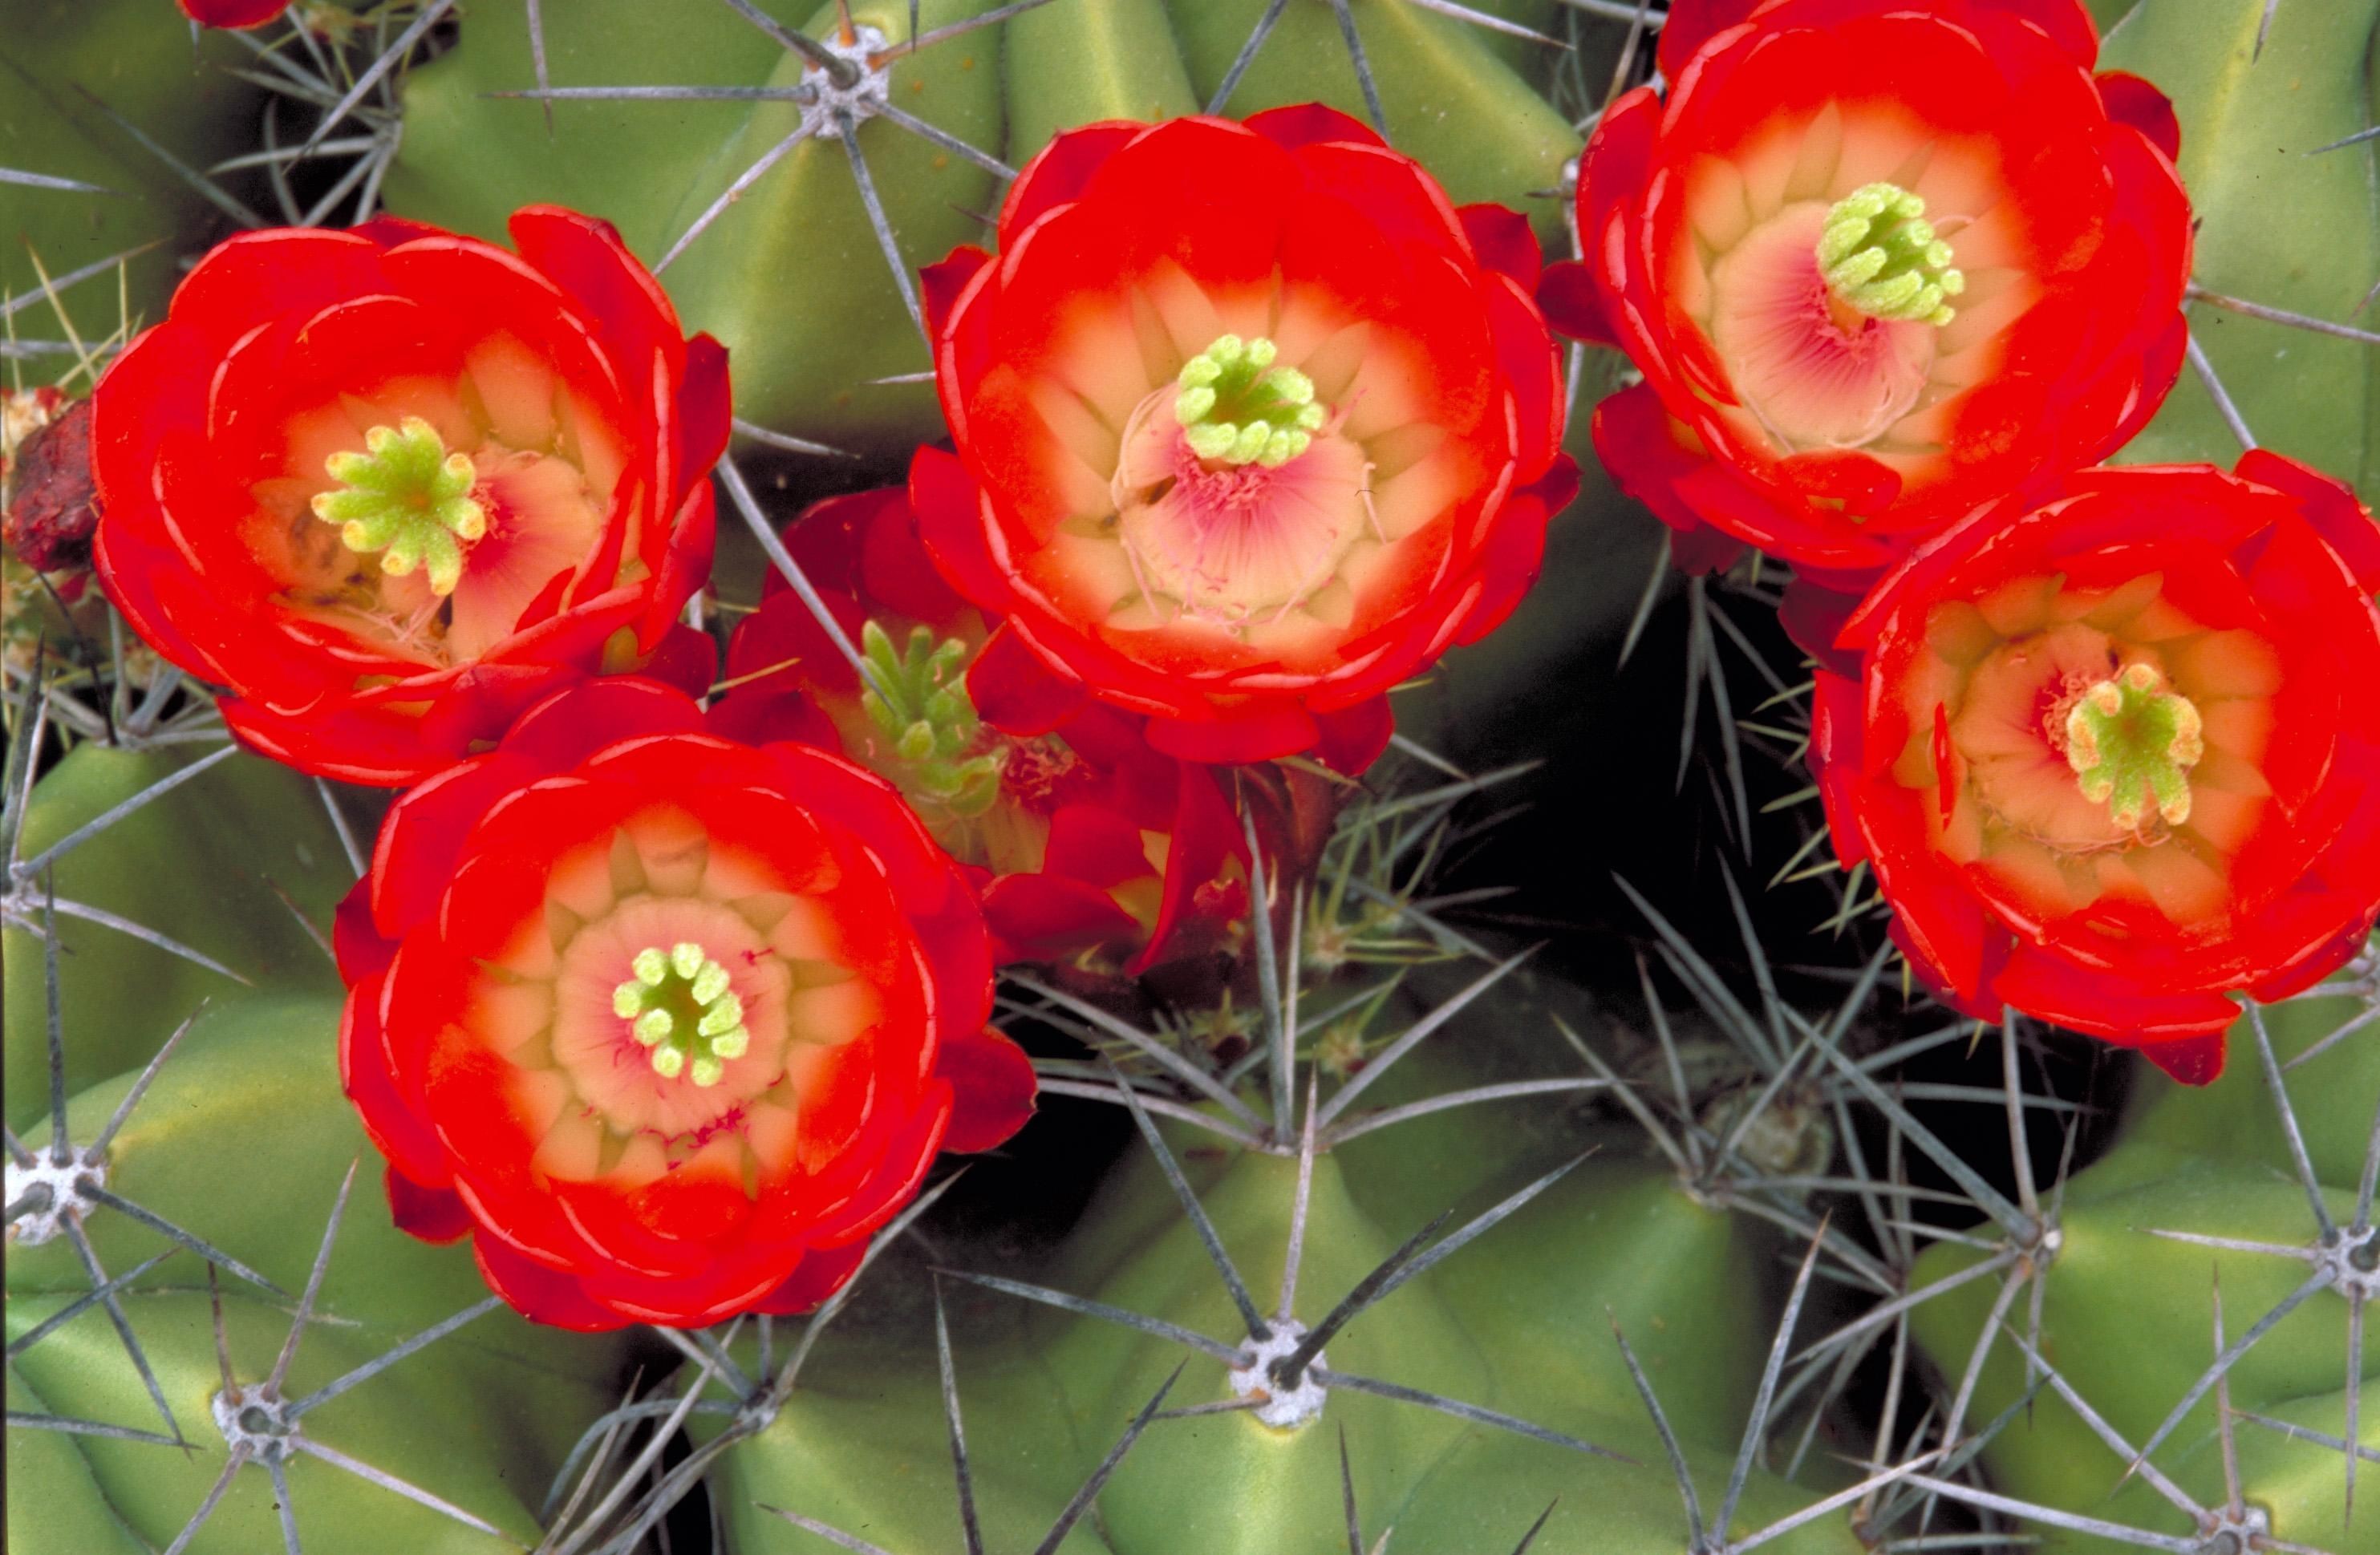 Red cactus flowers photo